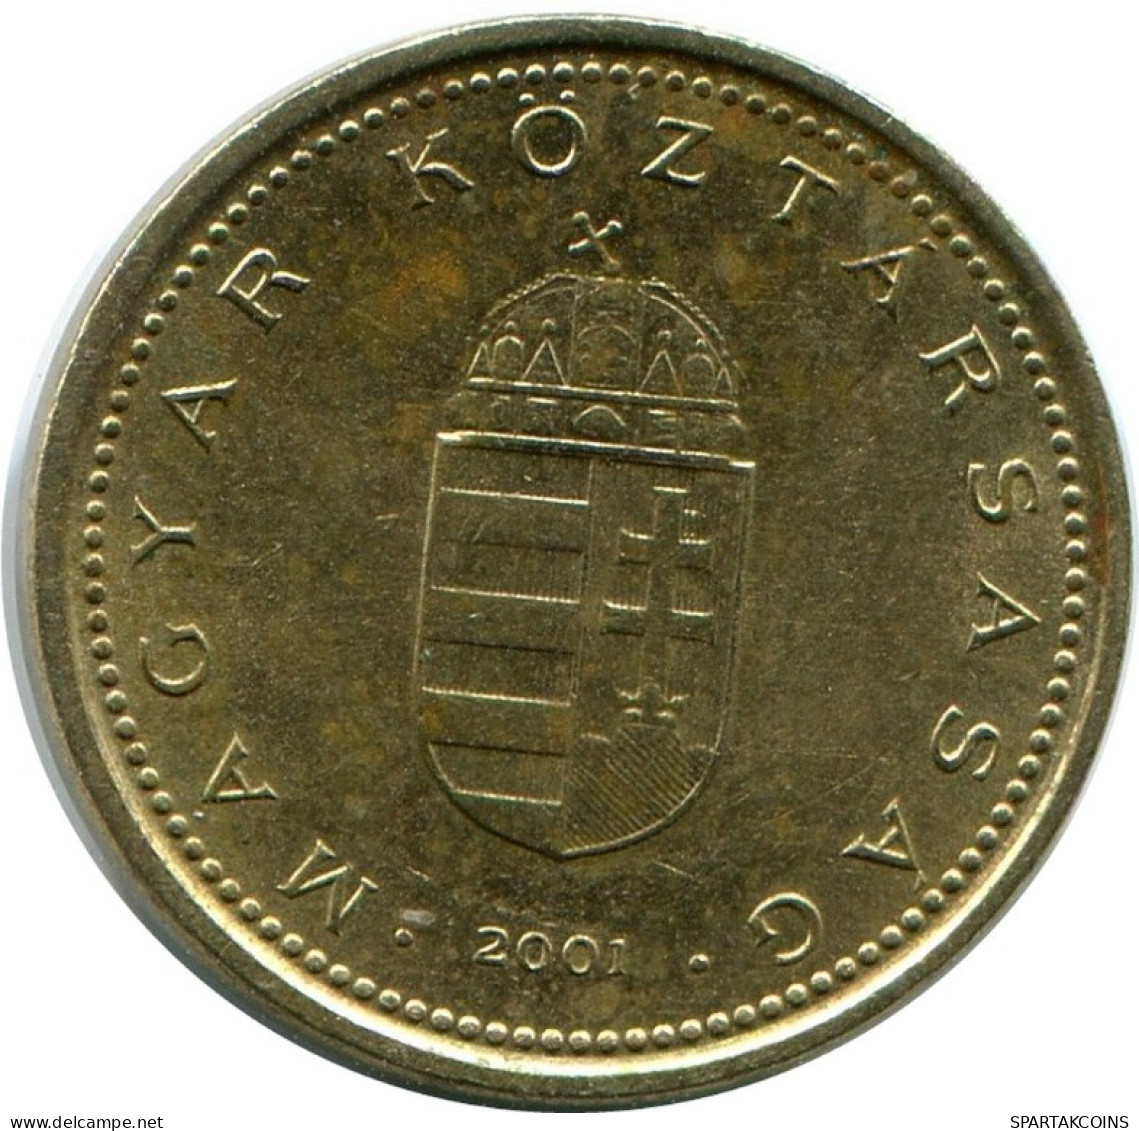 1 FORINT 2001 HUNGARY Coin #AH922.U.A - Ungarn